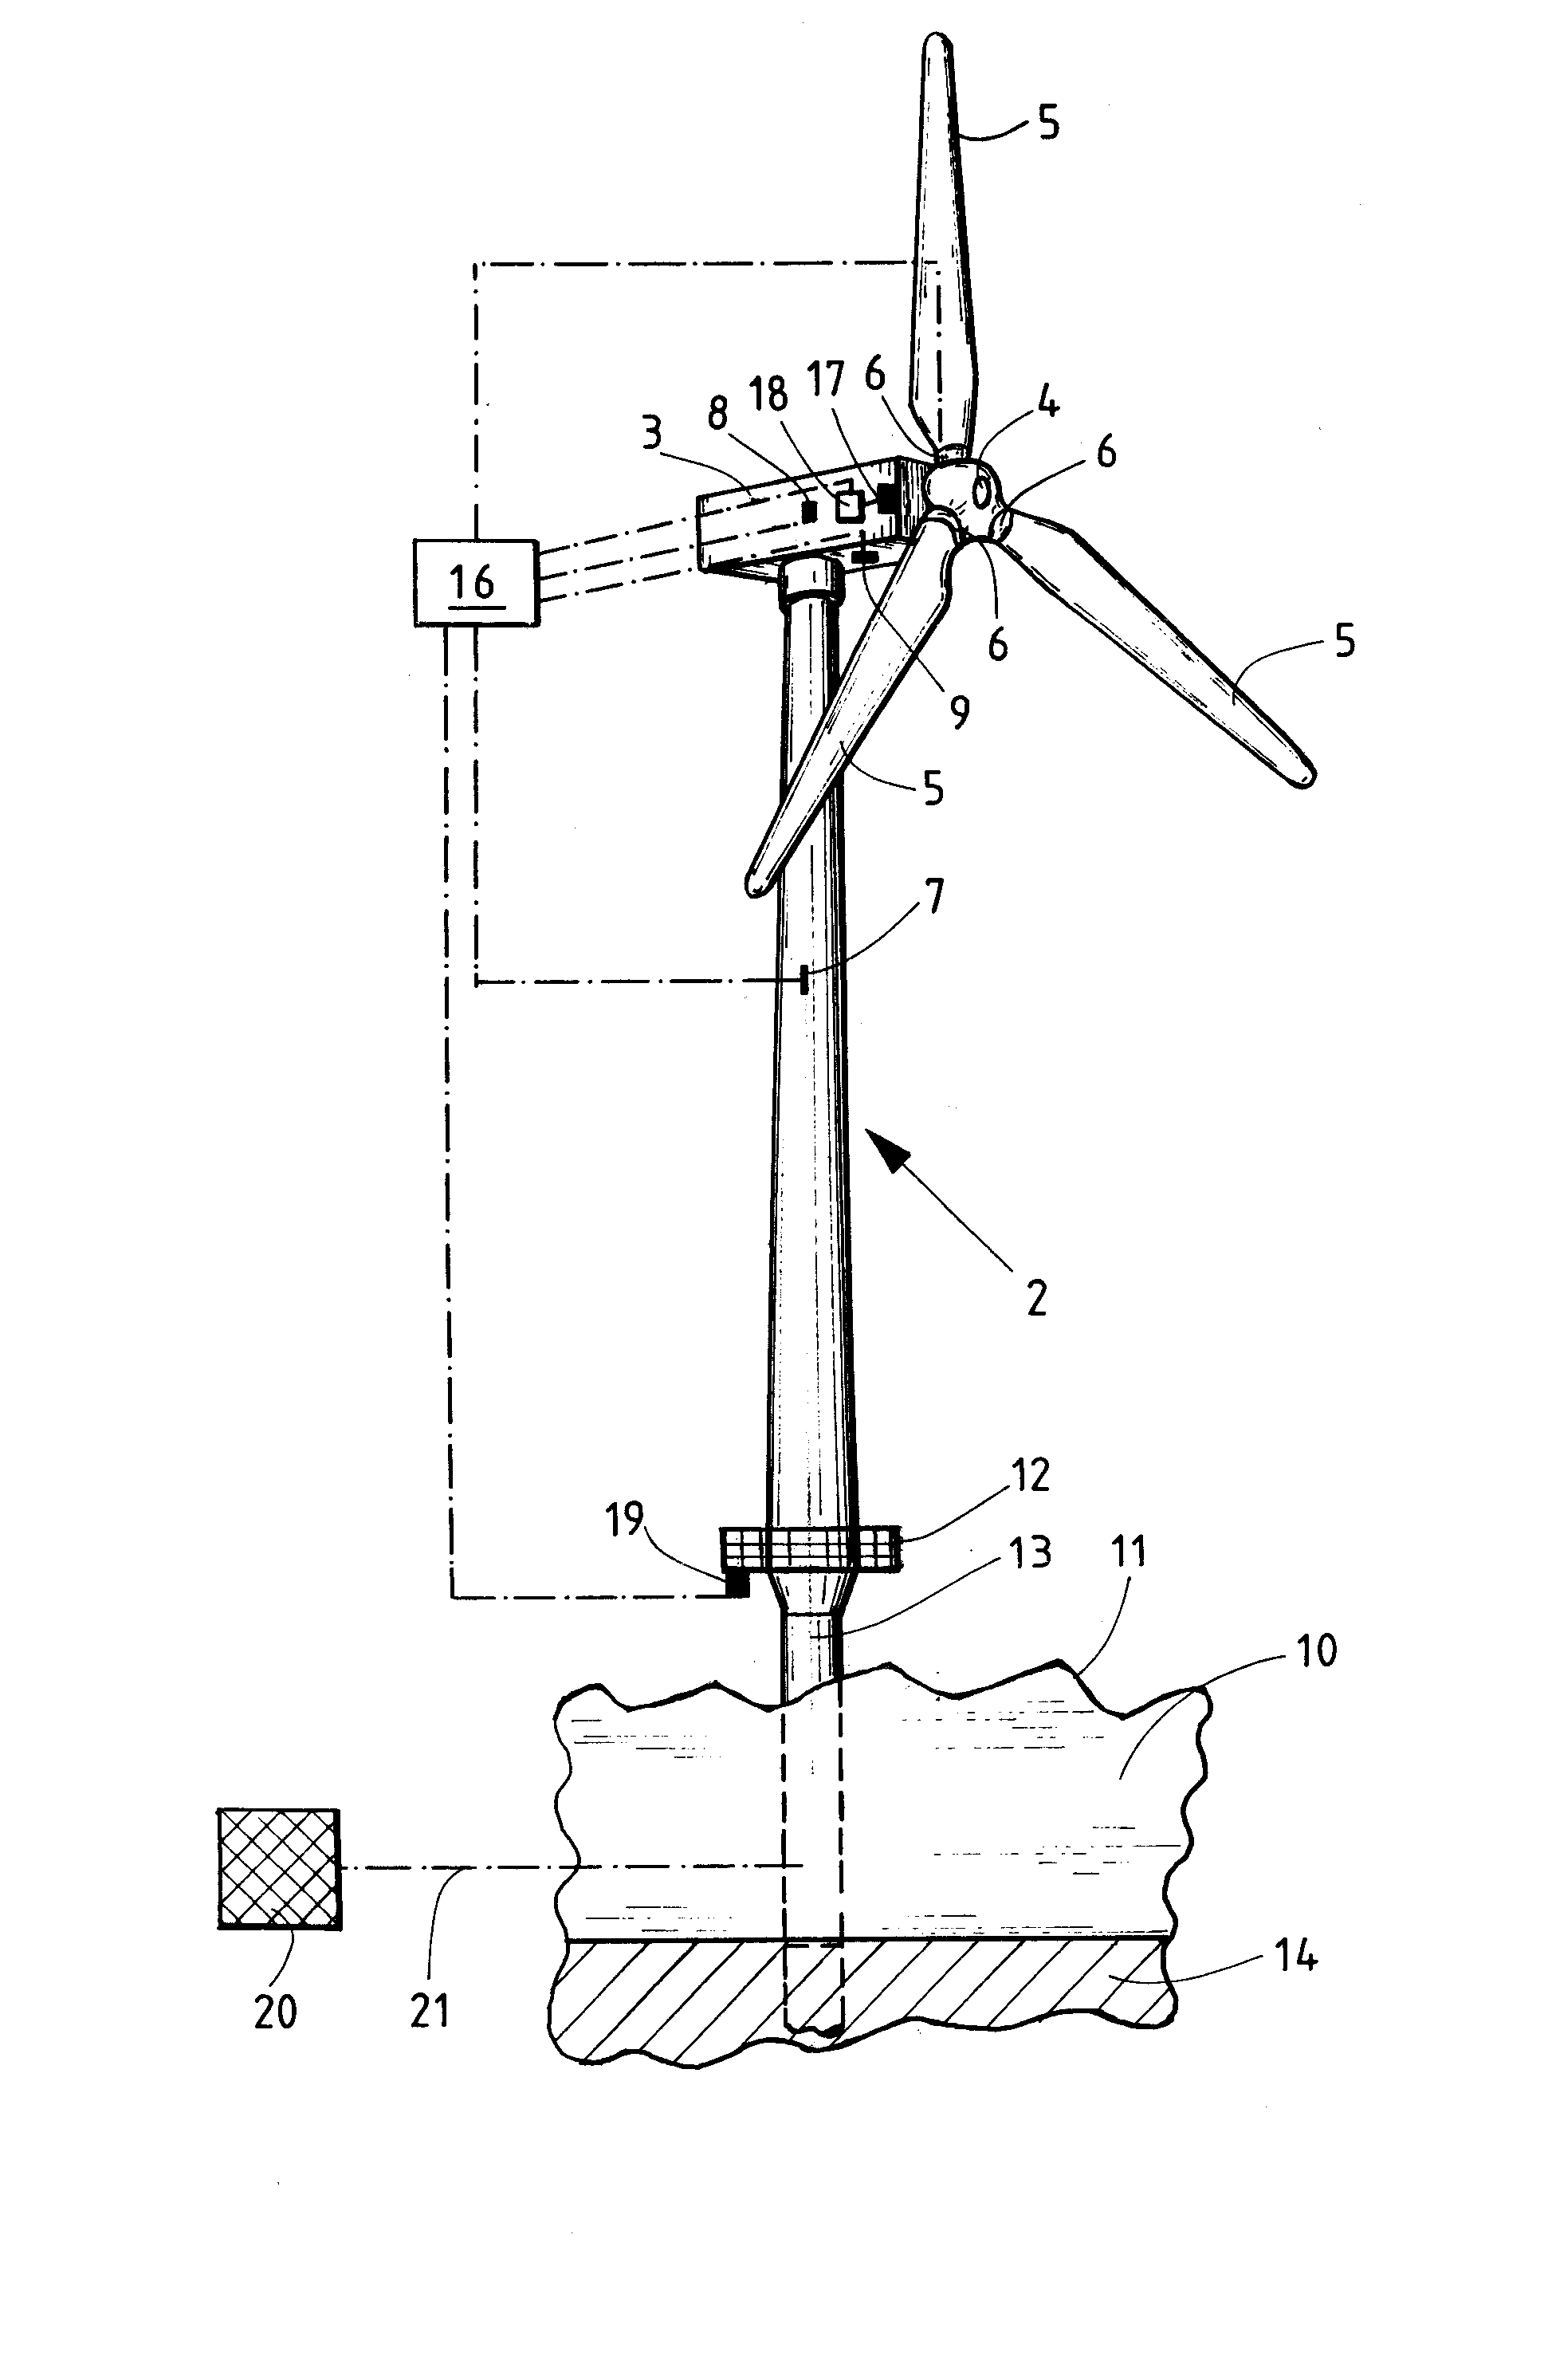 Oscillation damping of a wind turbine